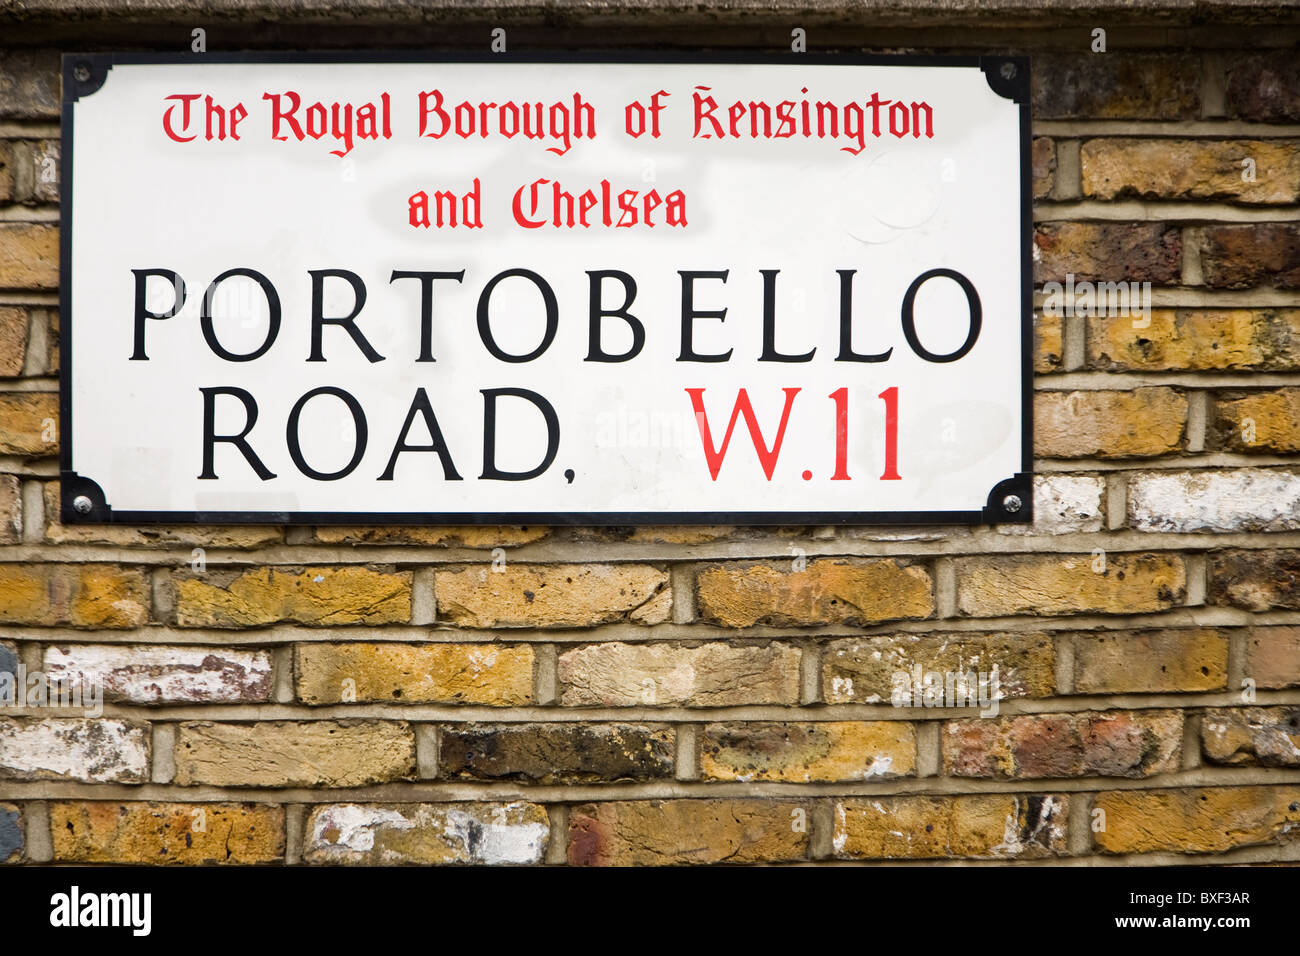 Portobello Road sign in London Stock Photo